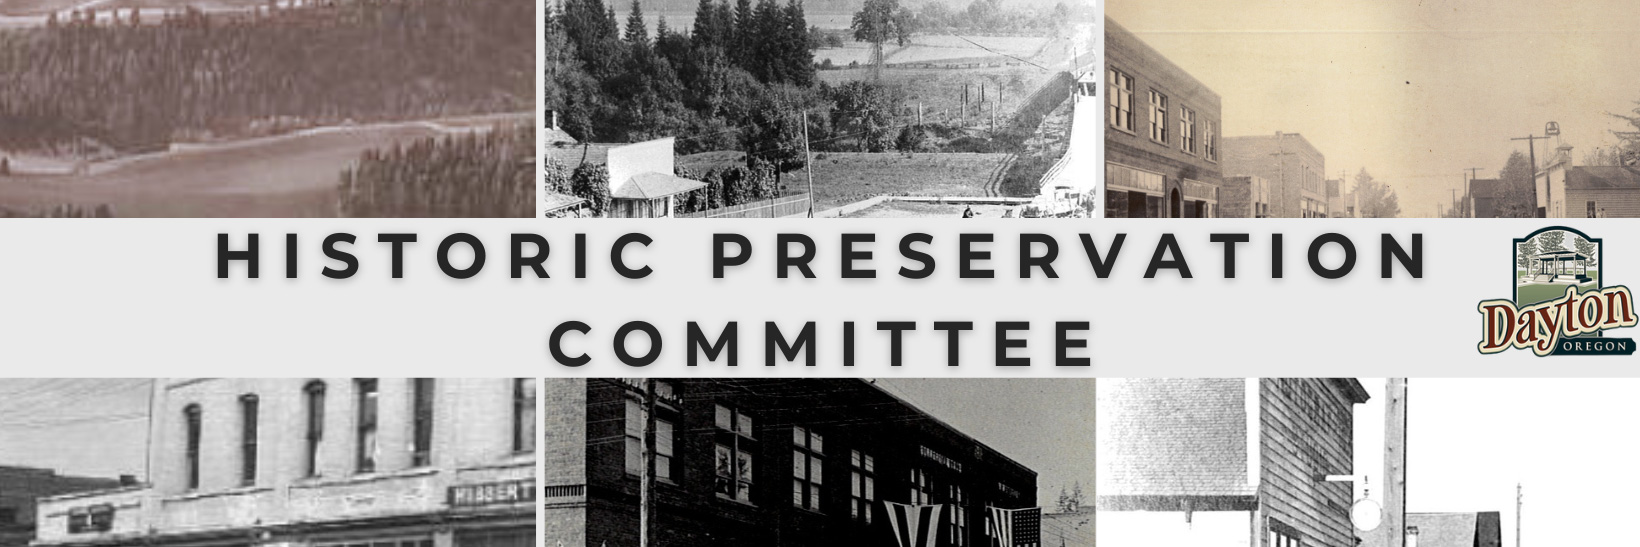 Dayton Historic Preservation Committee